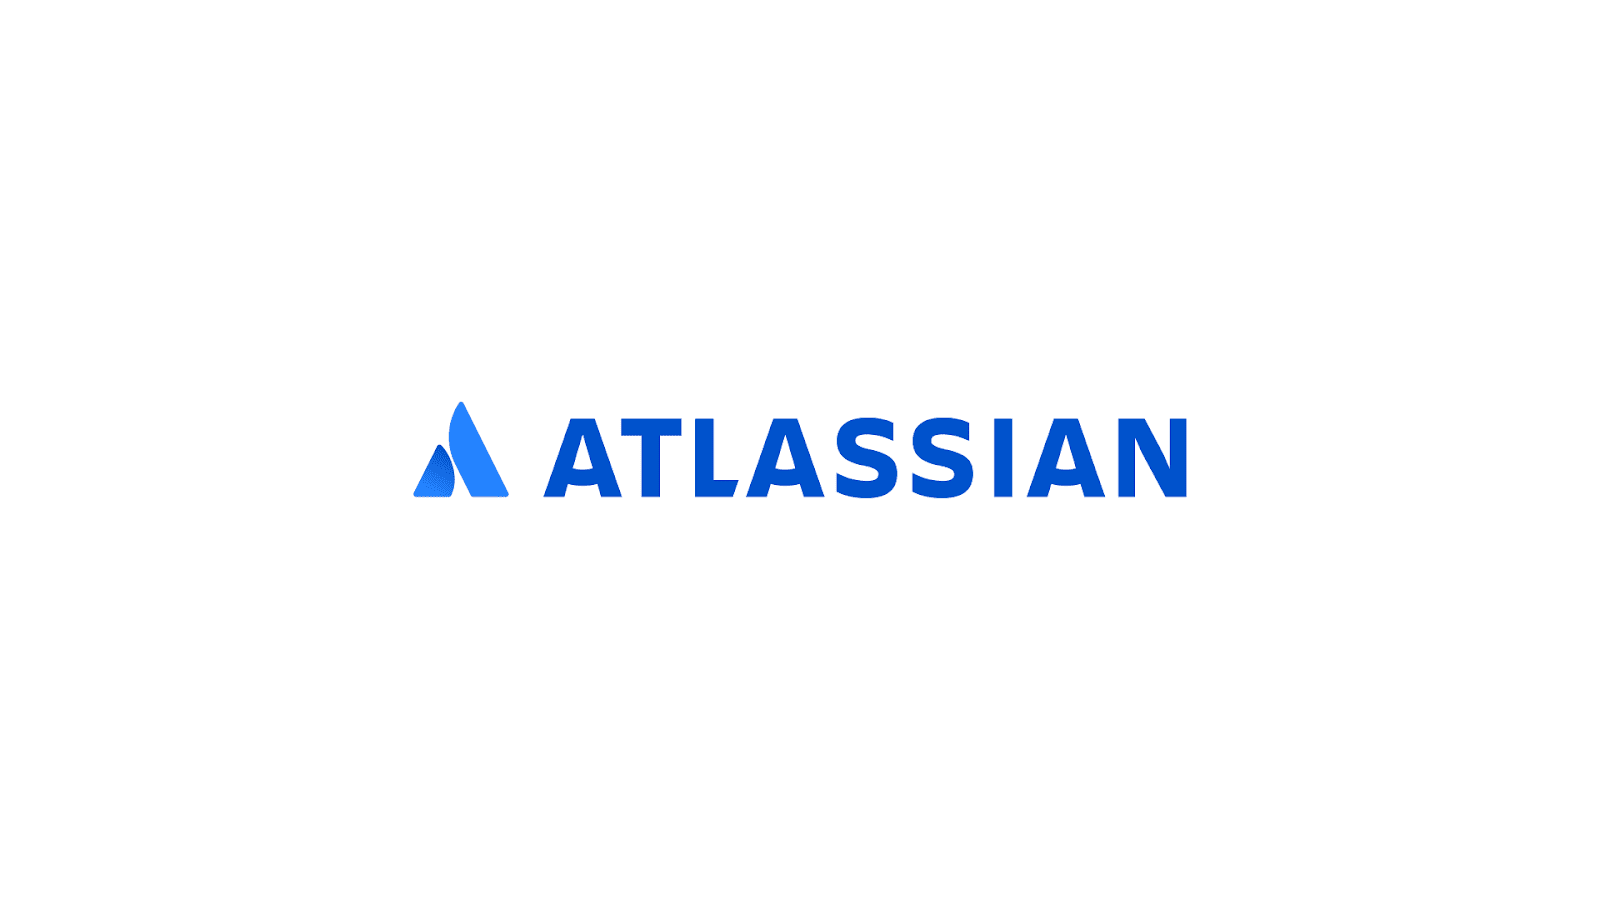 atlassian's logo